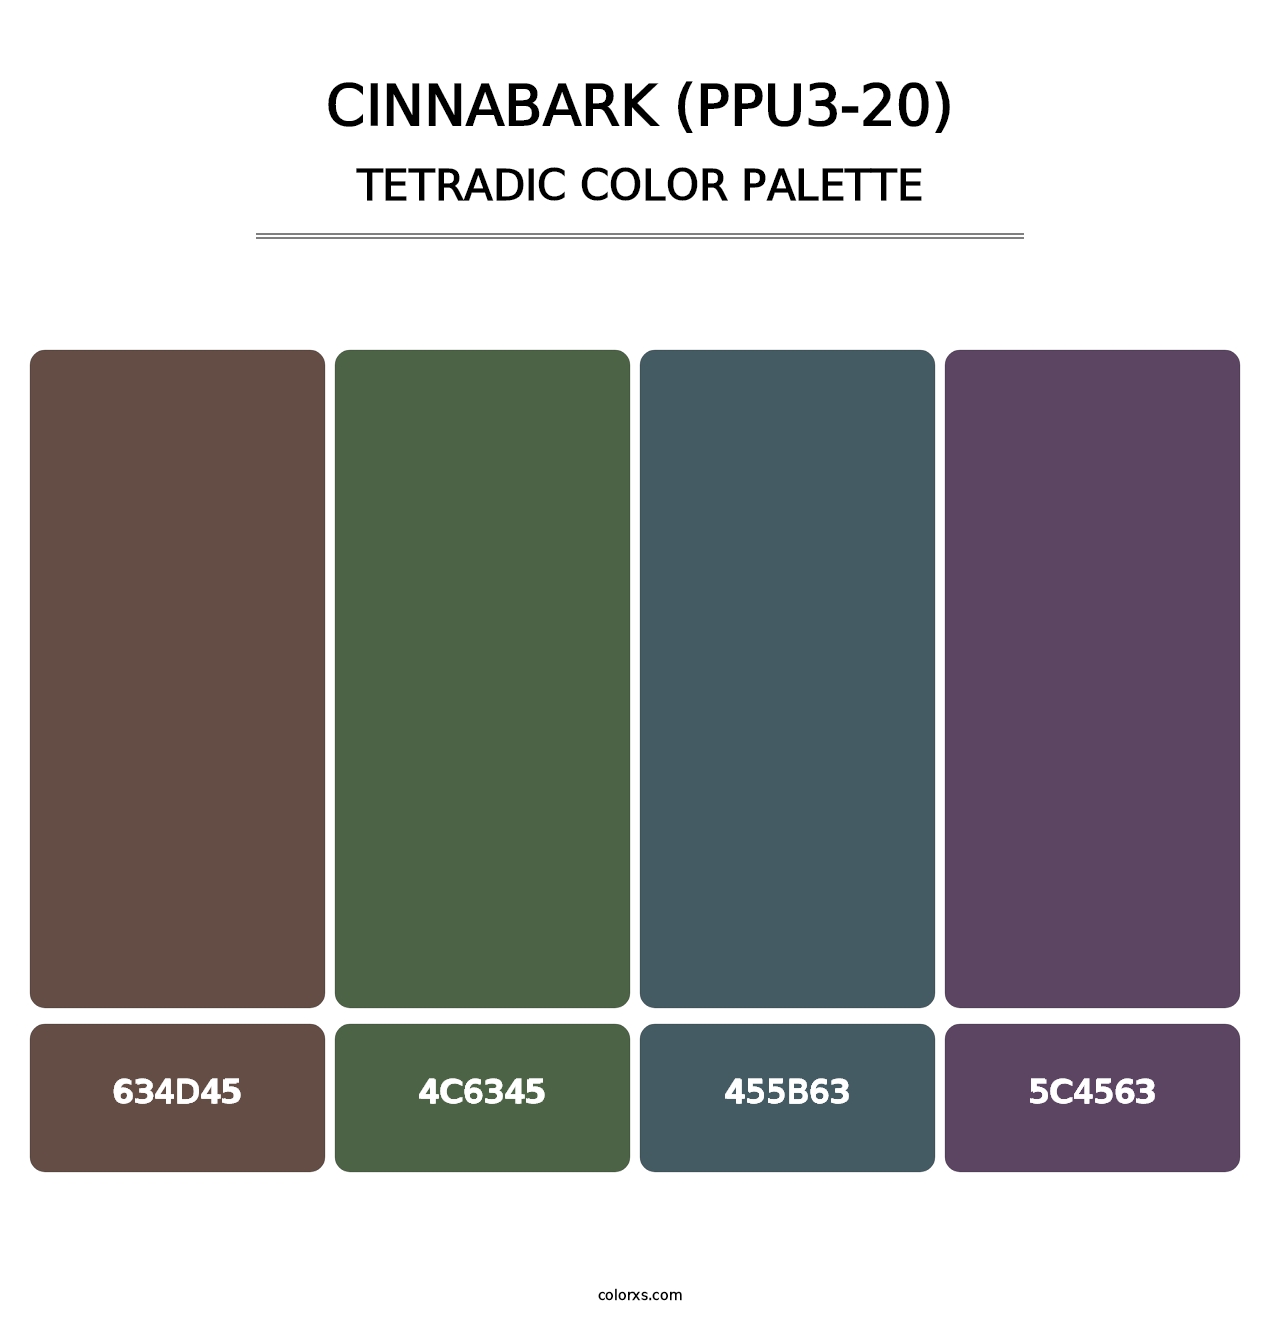 Cinnabark (PPU3-20) - Tetradic Color Palette